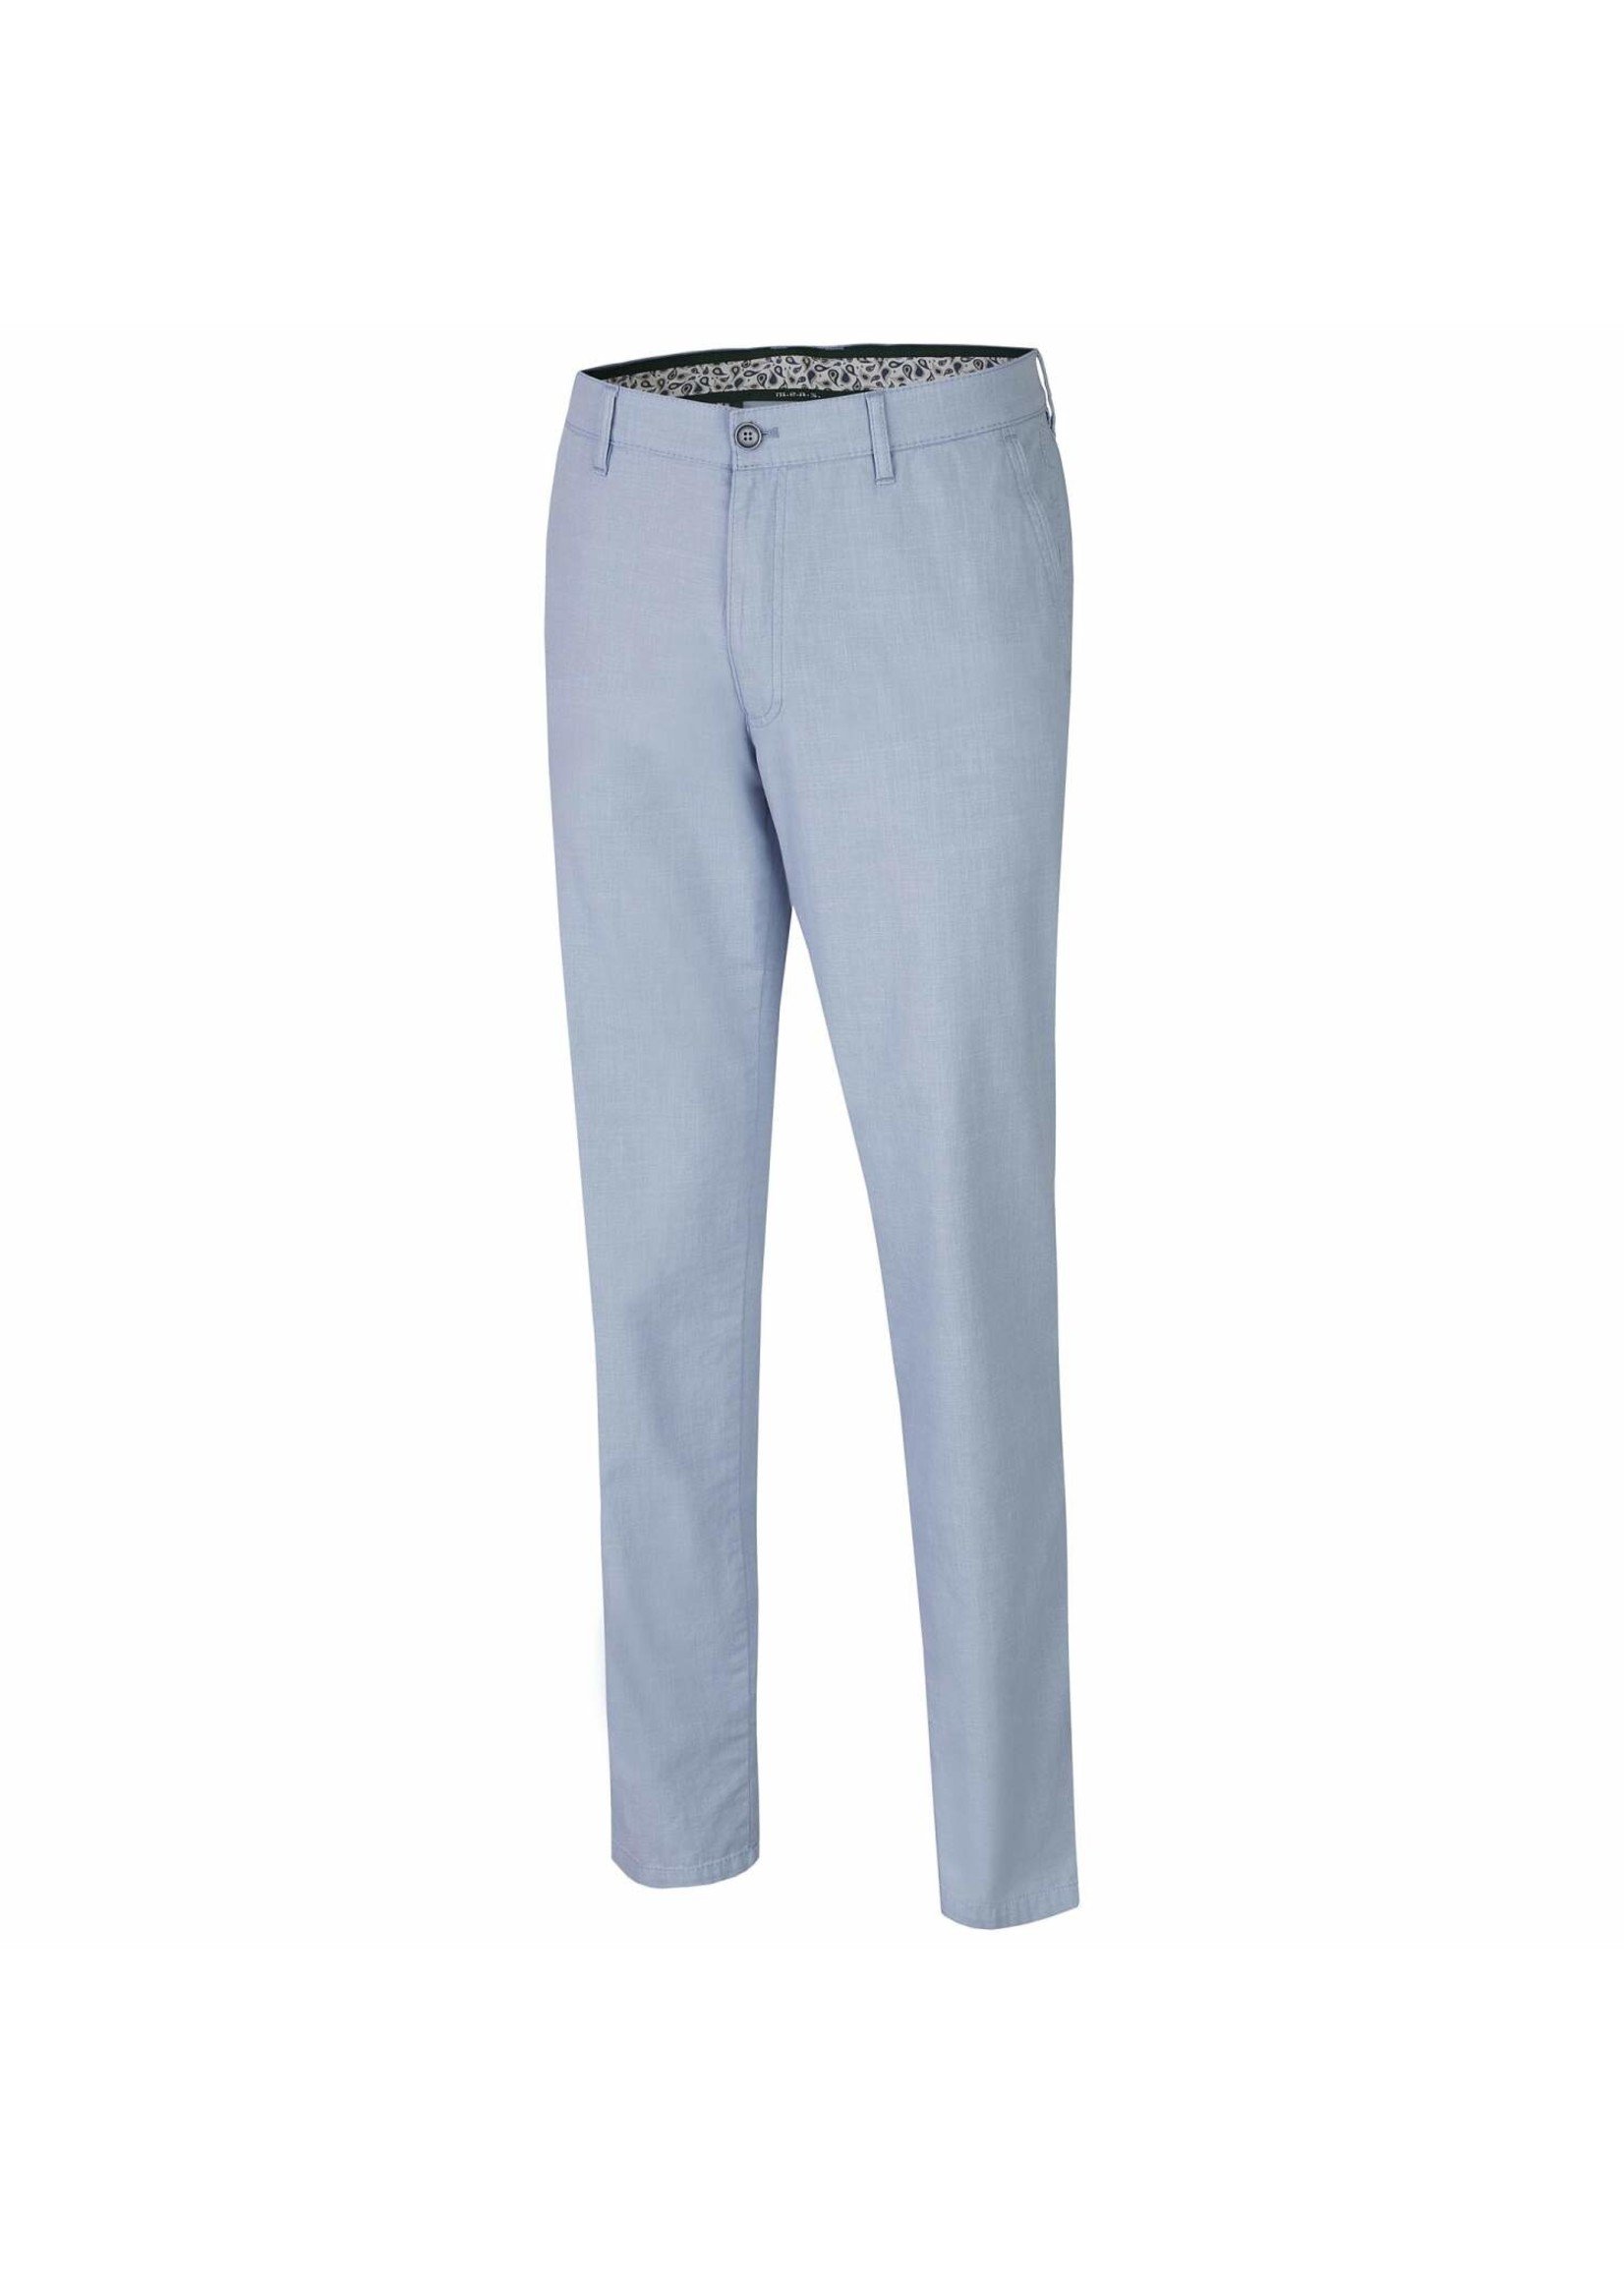 M.E.N.S. Pantalon en coton extensible effet lin style Madison-4917